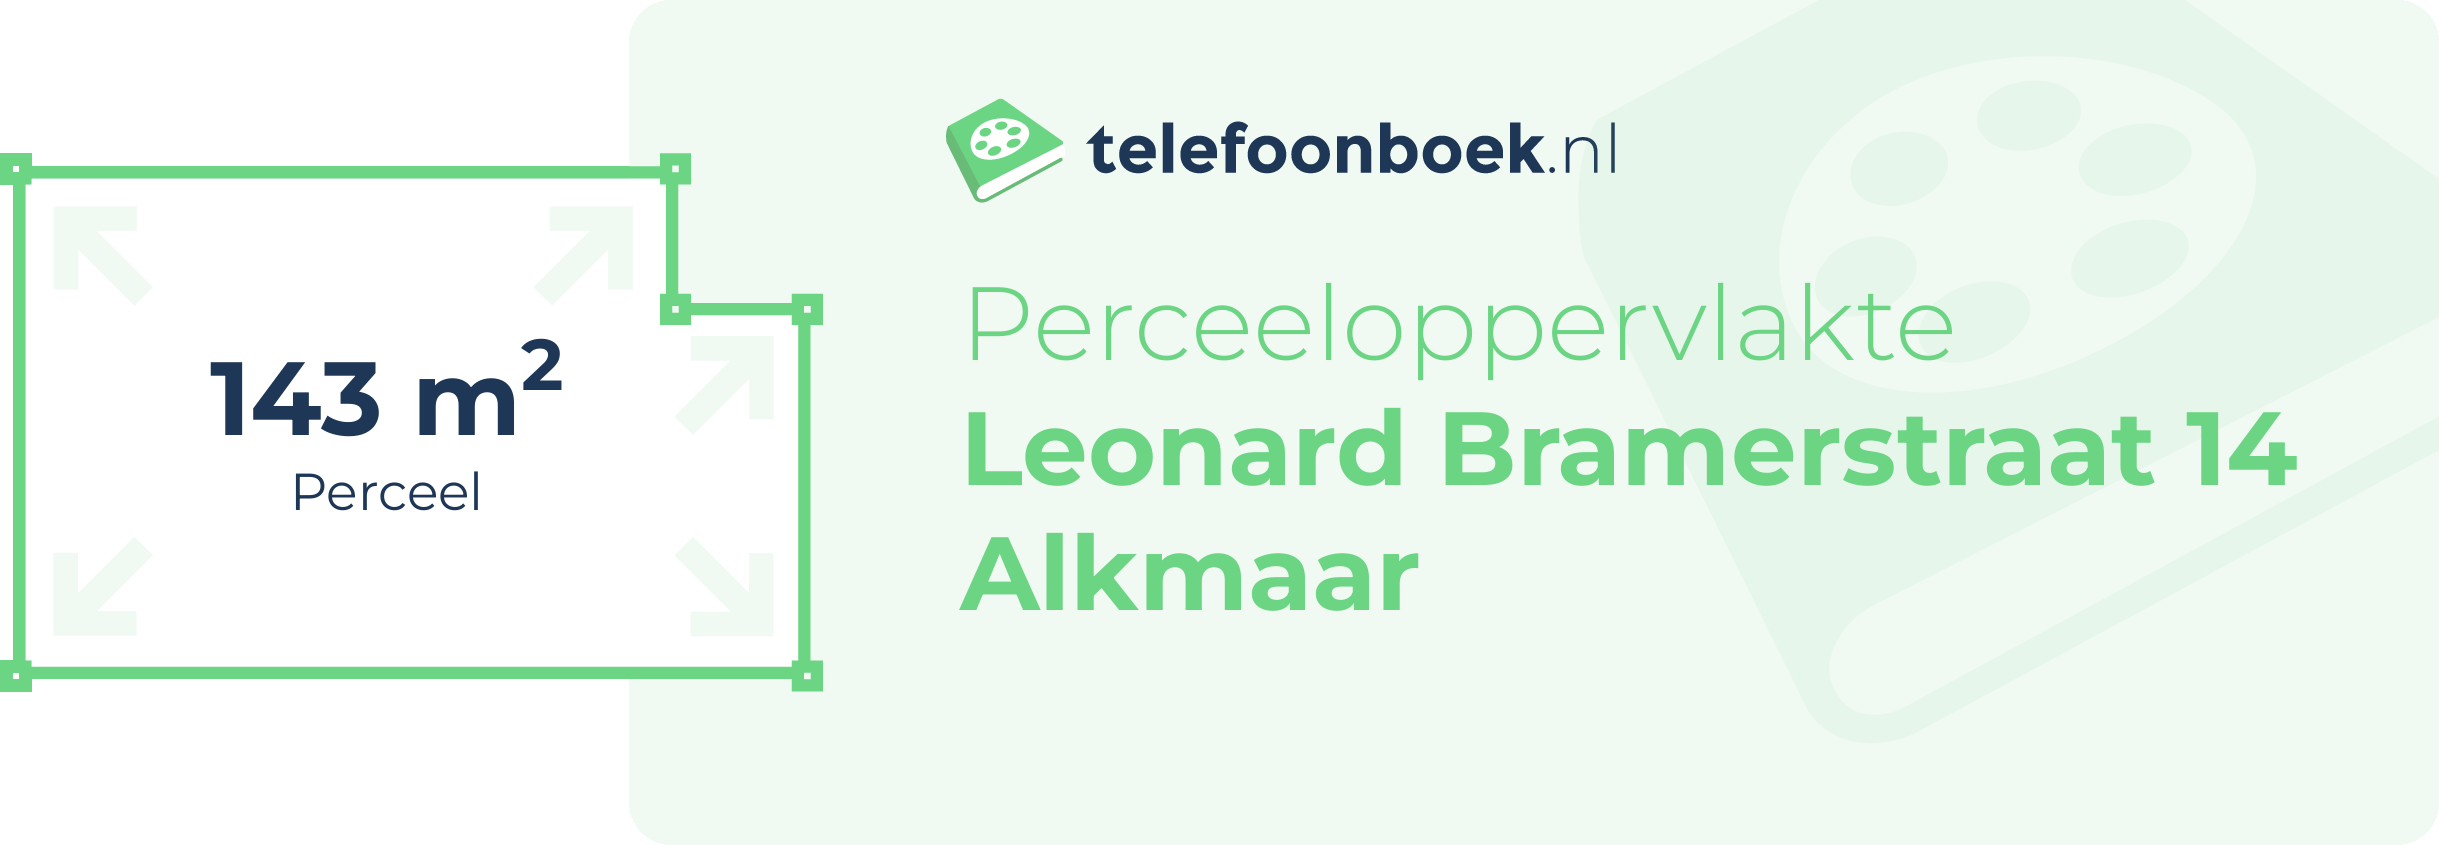 Perceeloppervlakte Leonard Bramerstraat 14 Alkmaar